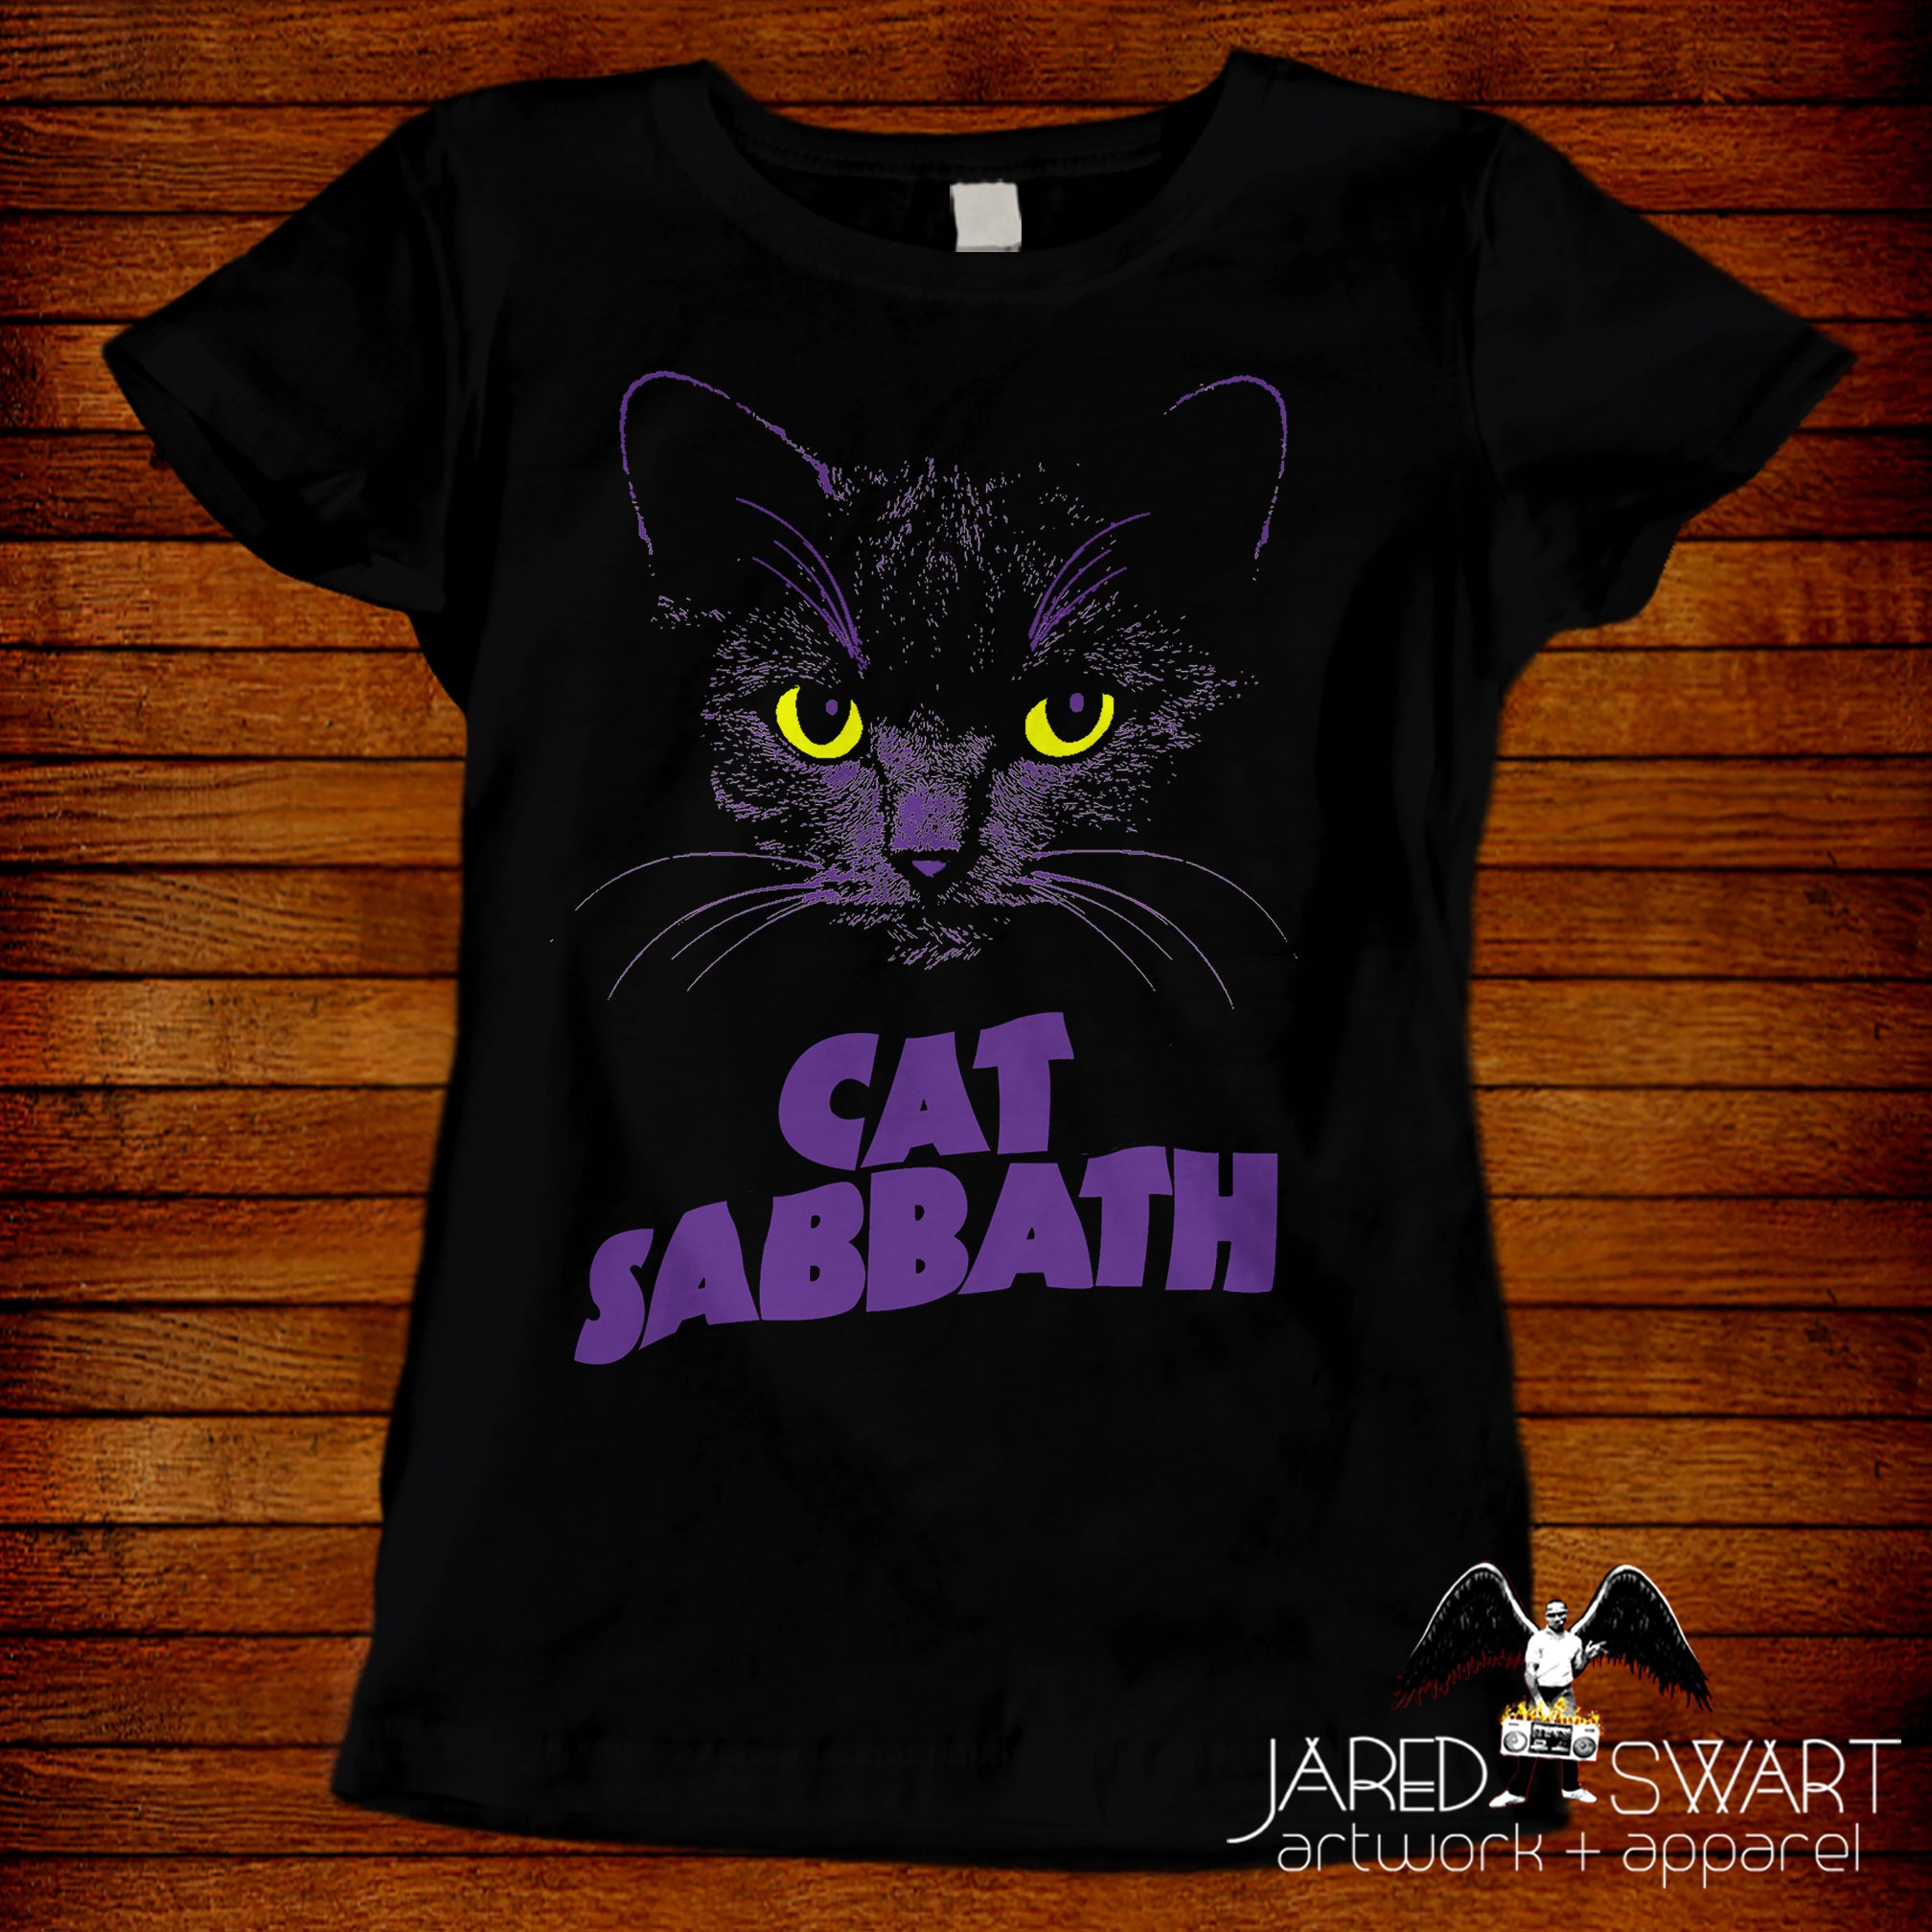 Cat Sabbath T-shirt (Master style)